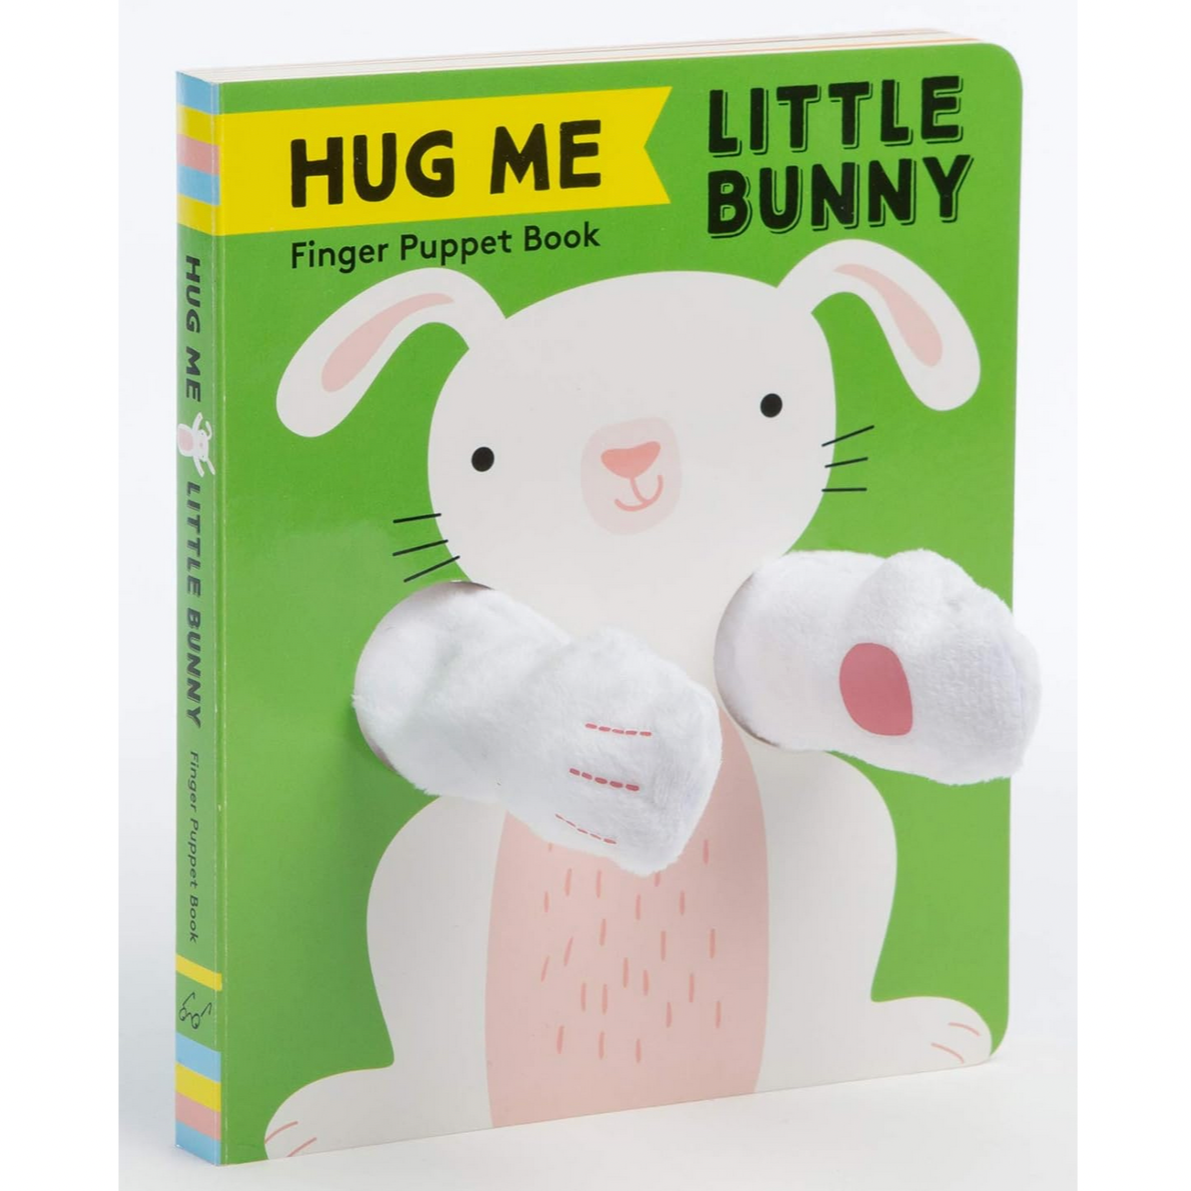 Hug Me Little Bunny: Finger Puppet Book (0-3yrs)